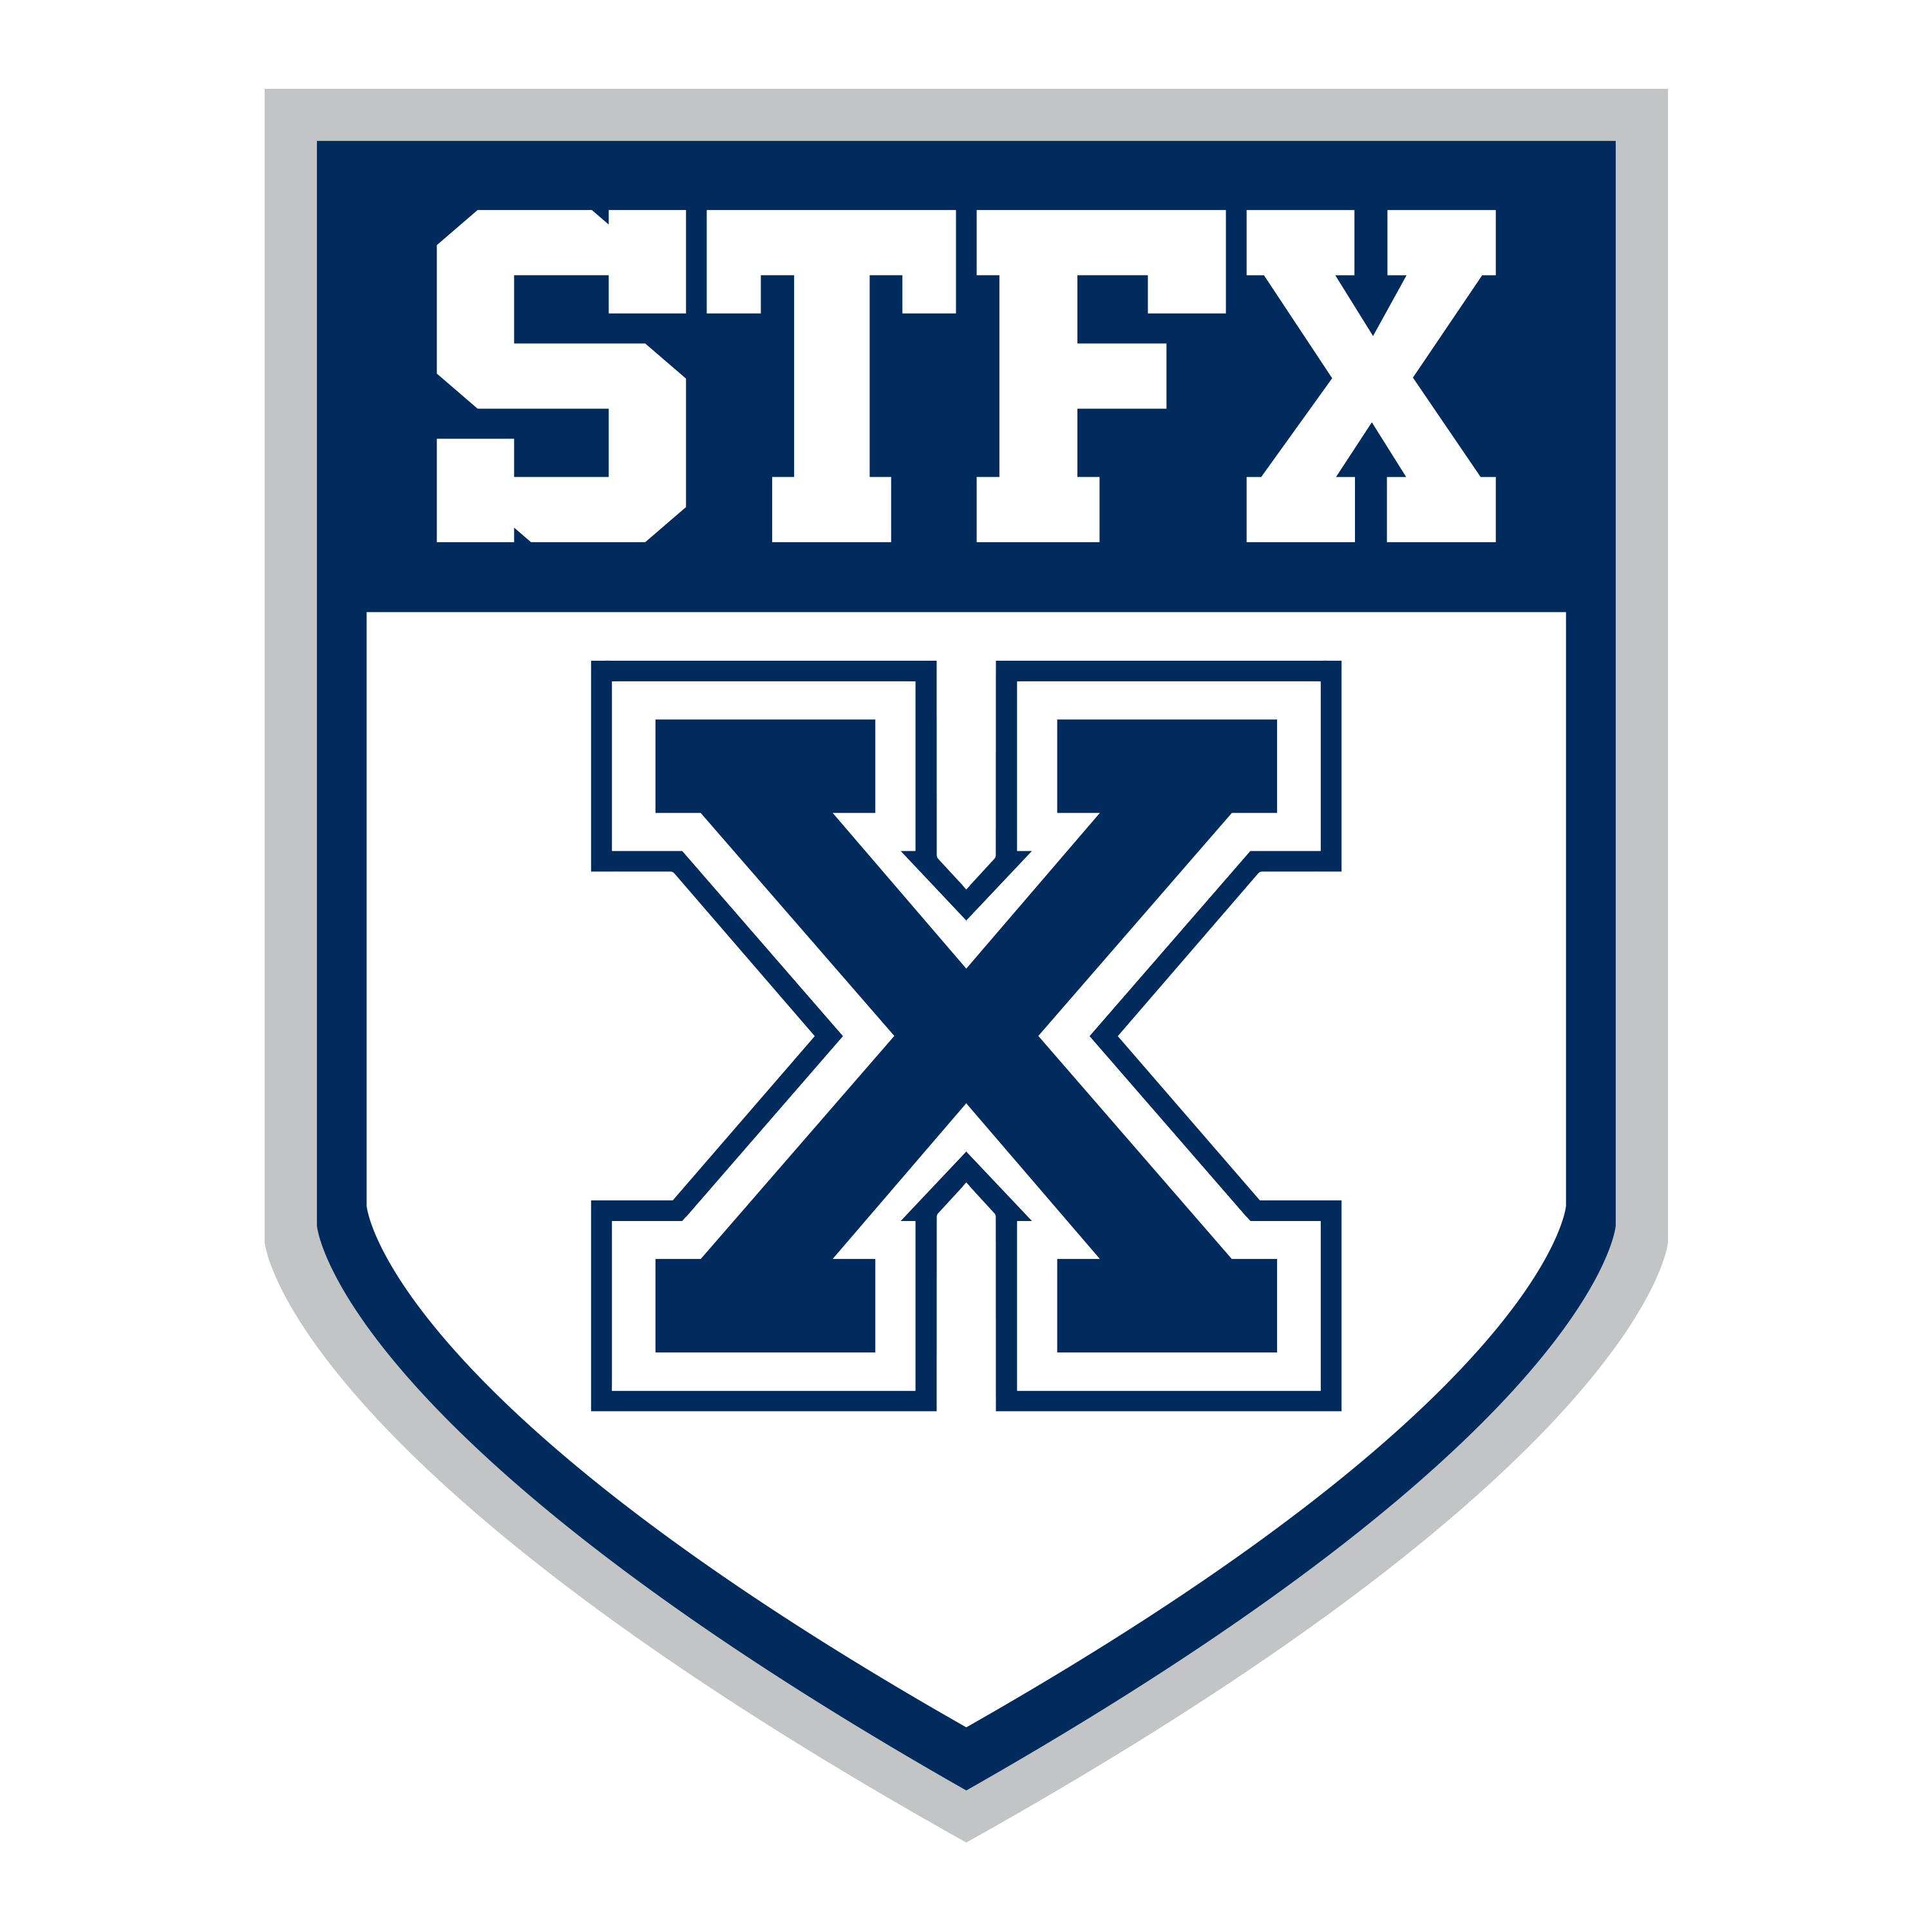 STFX_Shield.png (203 KB)